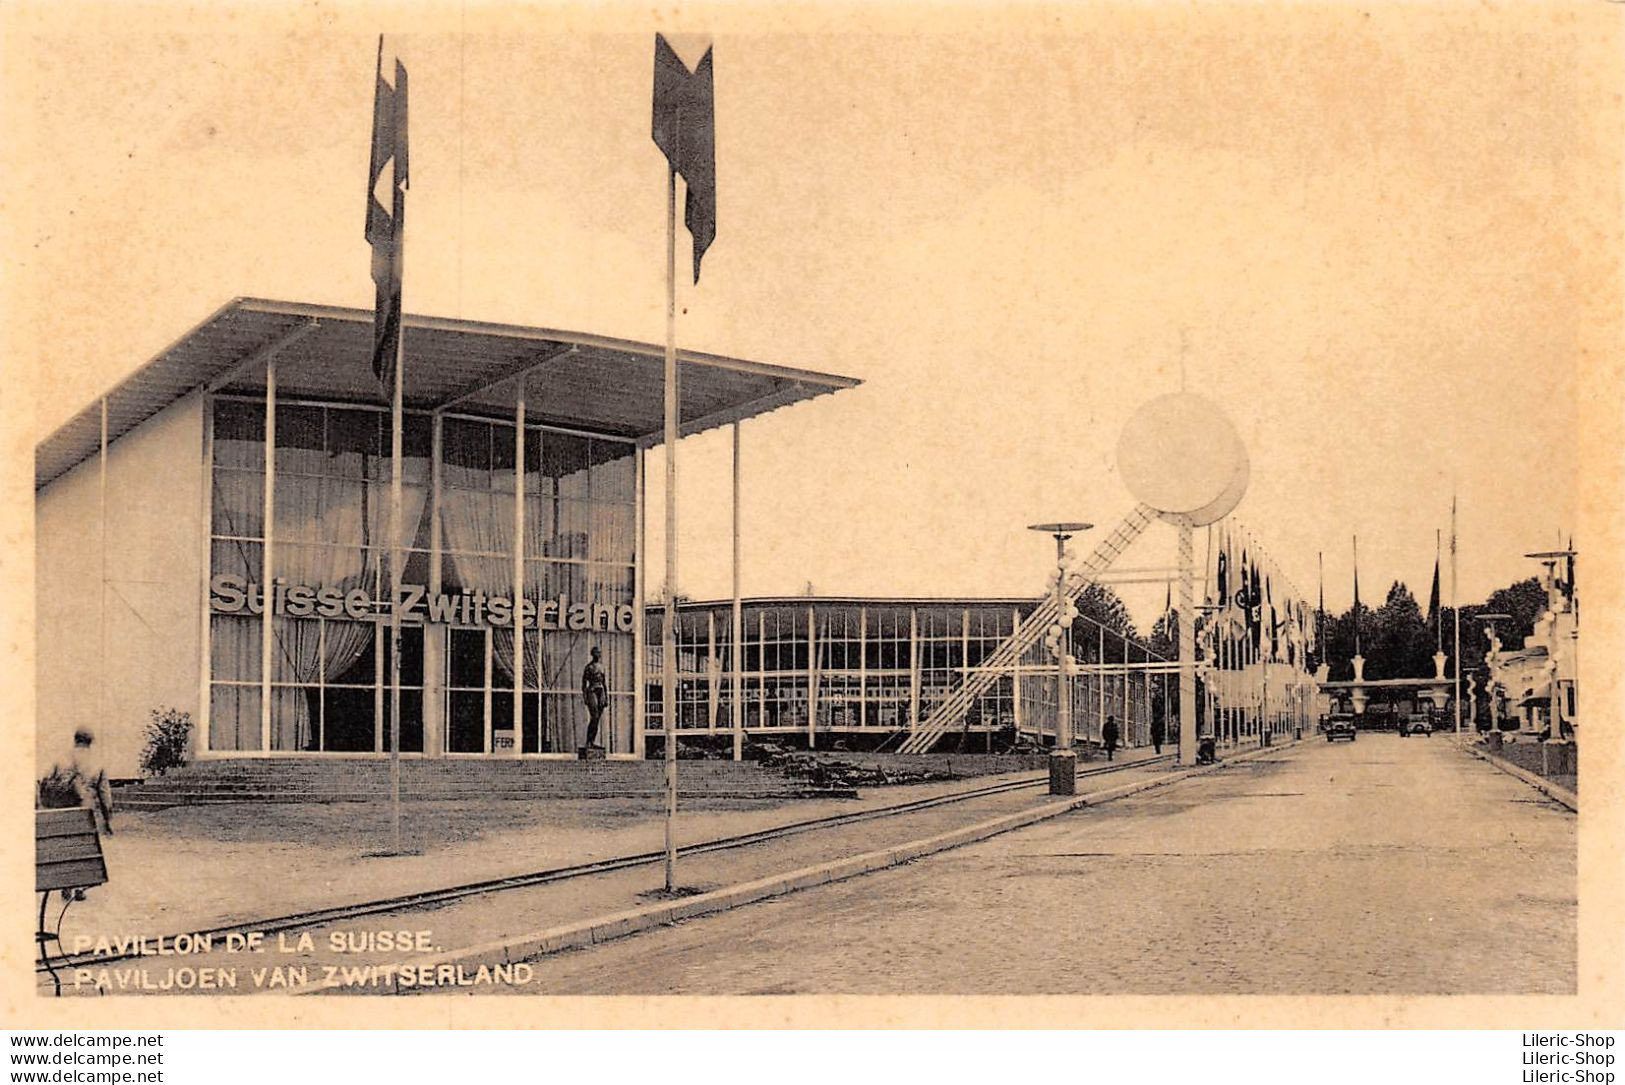 Exposition Universelle 1935 - PAVILLON DE LA SUISSE.  PAVILJOEN VAN ZWITSERLAND - Universal Exhibitions